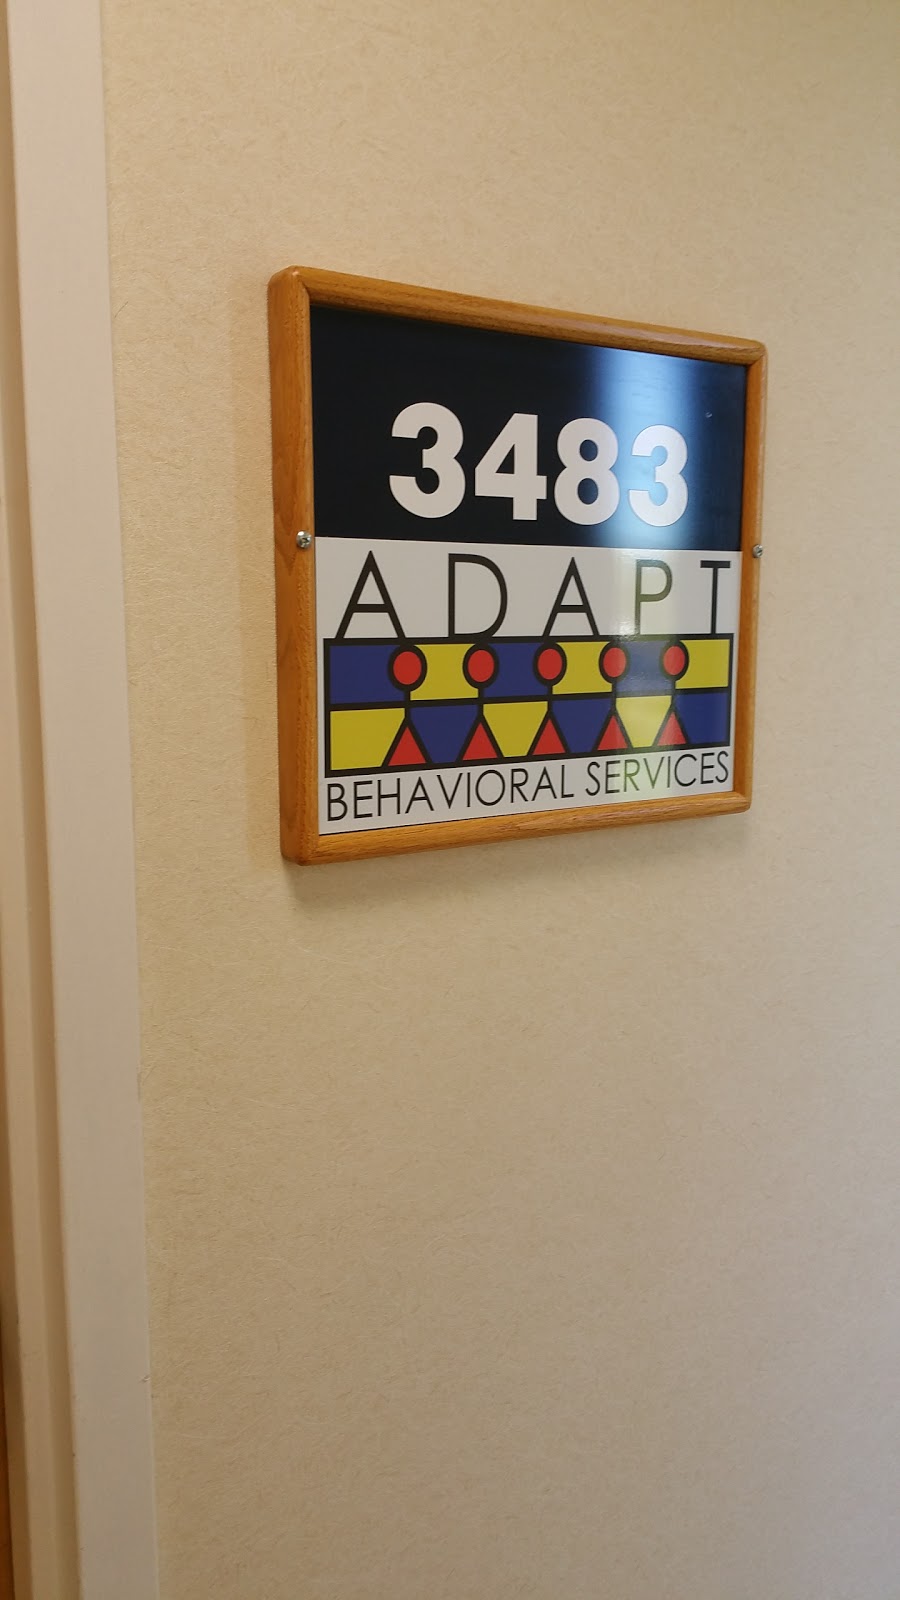 ADAPT Behavioral Services